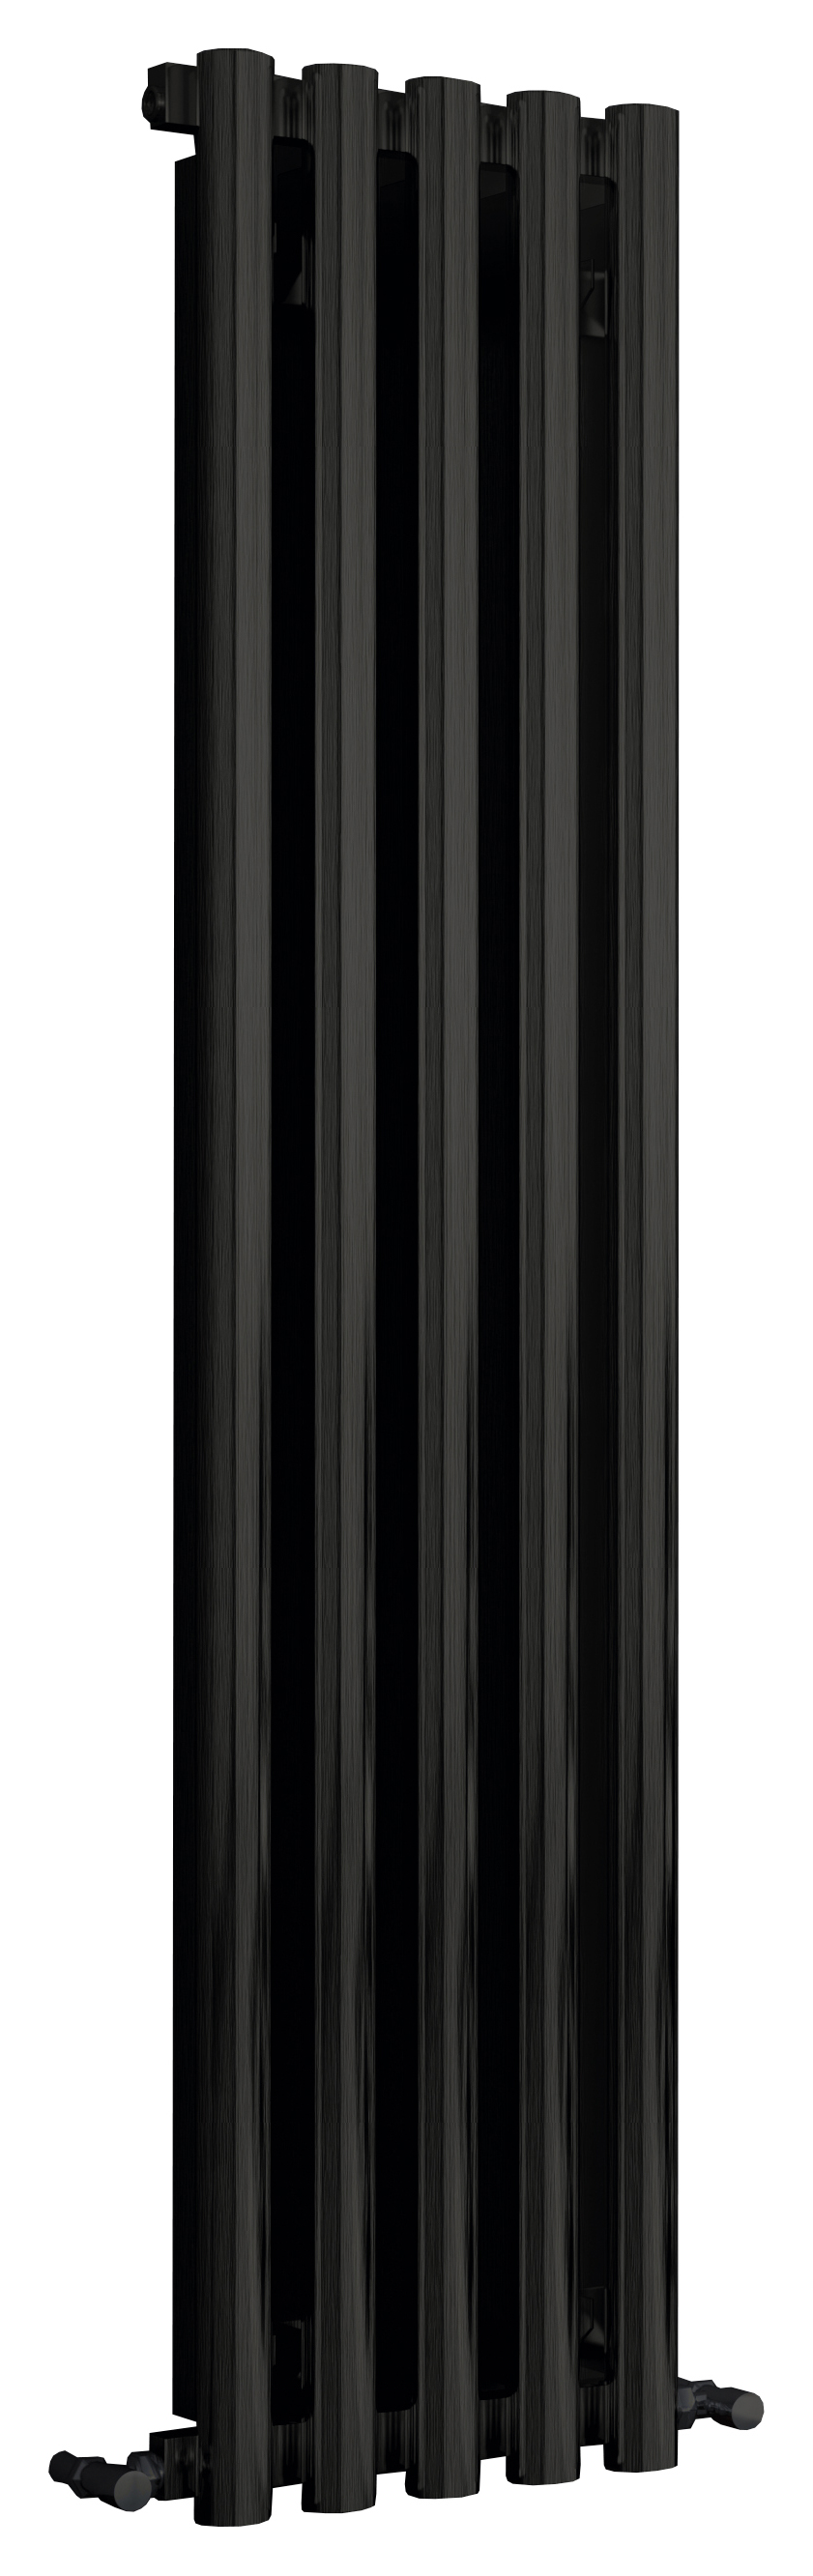 Towelrads Oxshott Vertical Aluminium Designer Radiator - Black 1800mm - Various Widths Available